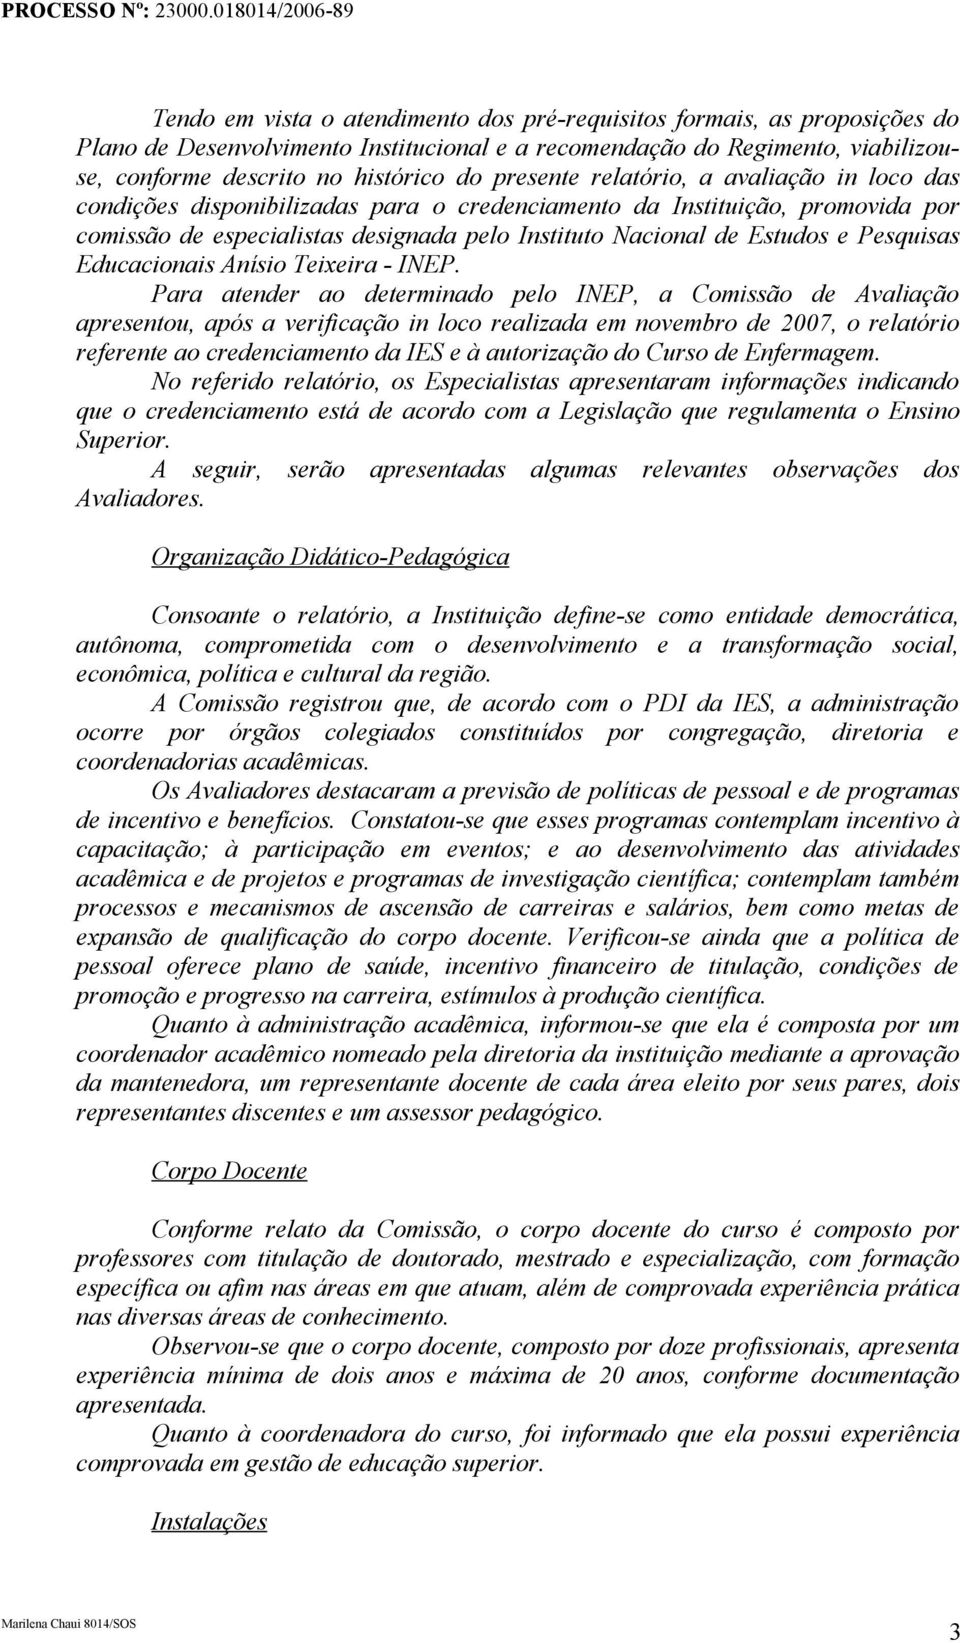 Pesquisas Educacionais Anísio Teixeira - INEP.